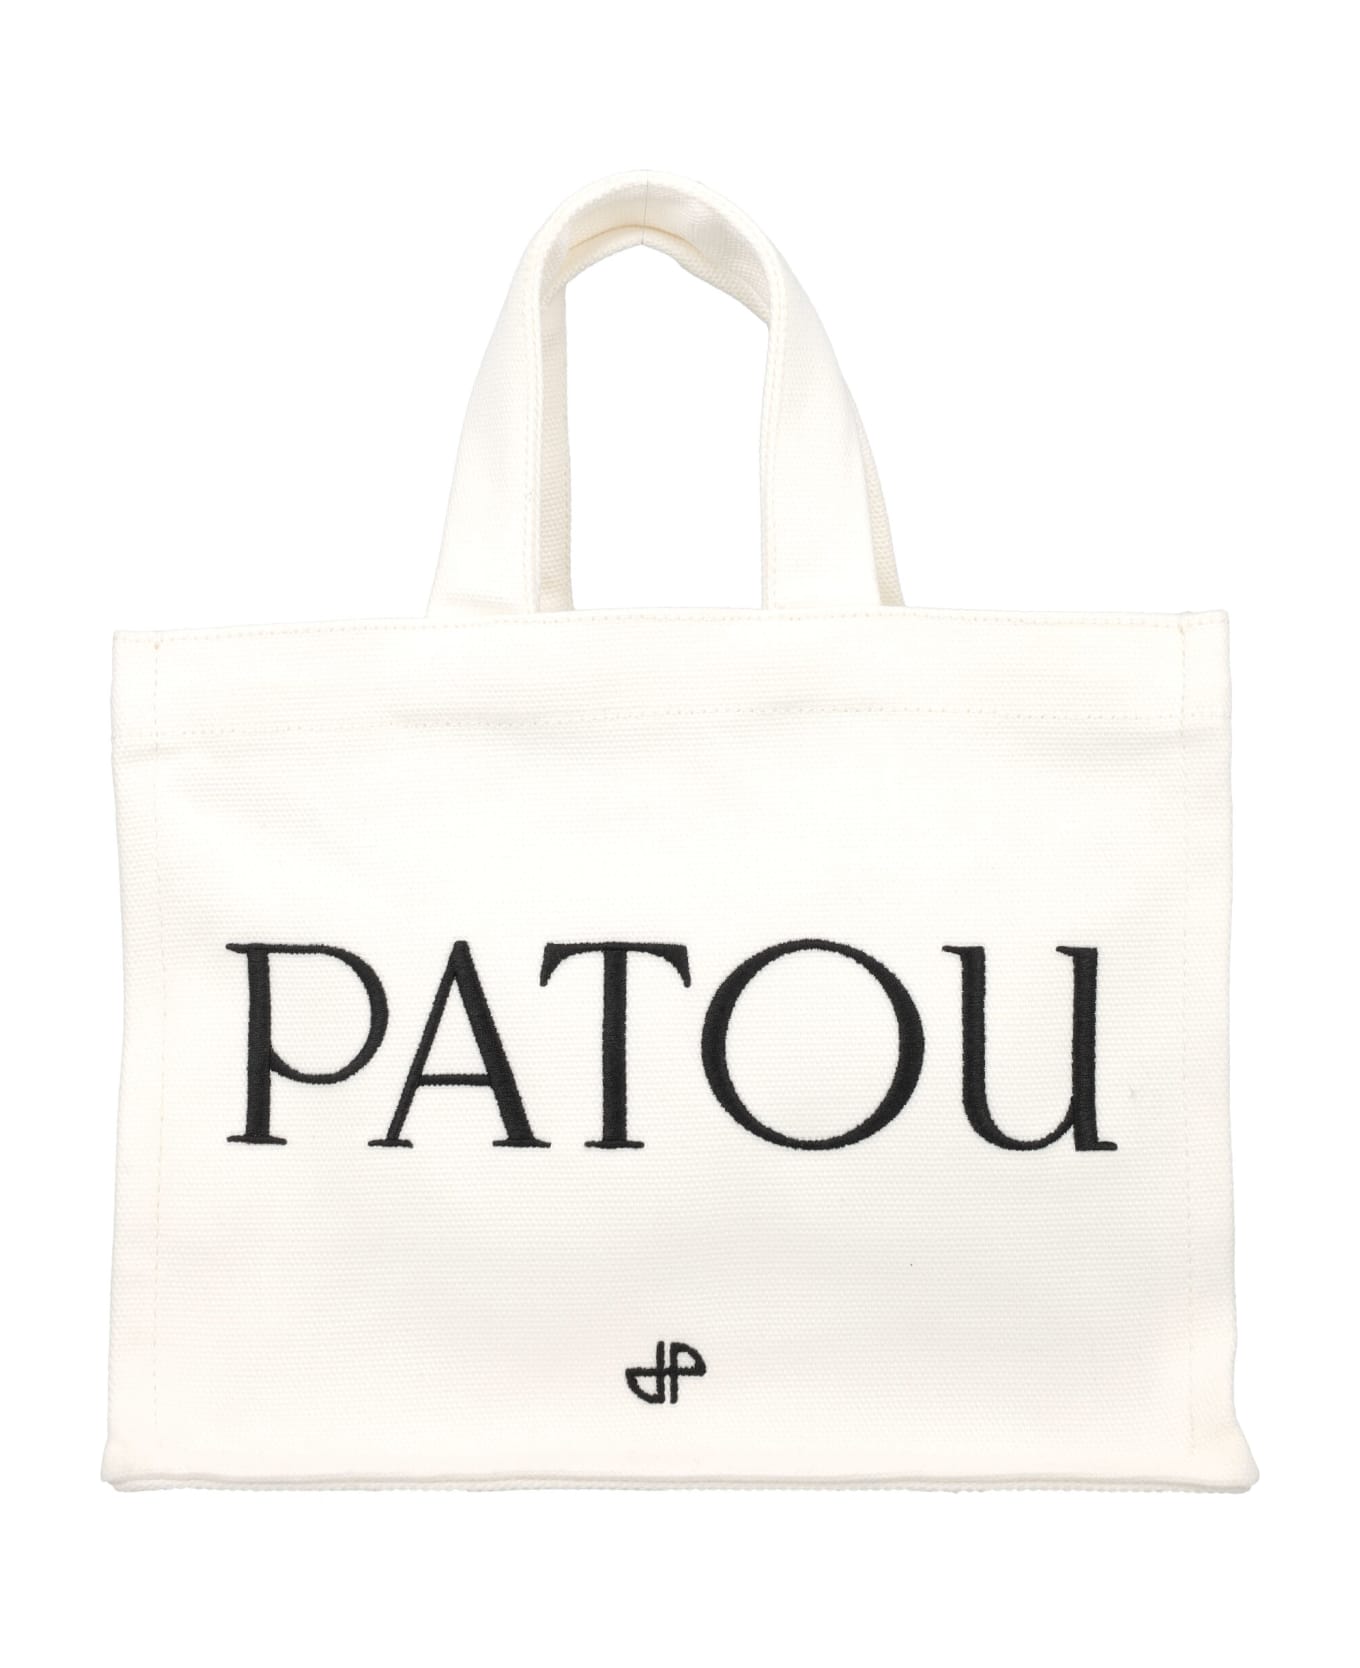 Patou Small Canvas Tote Bag - White